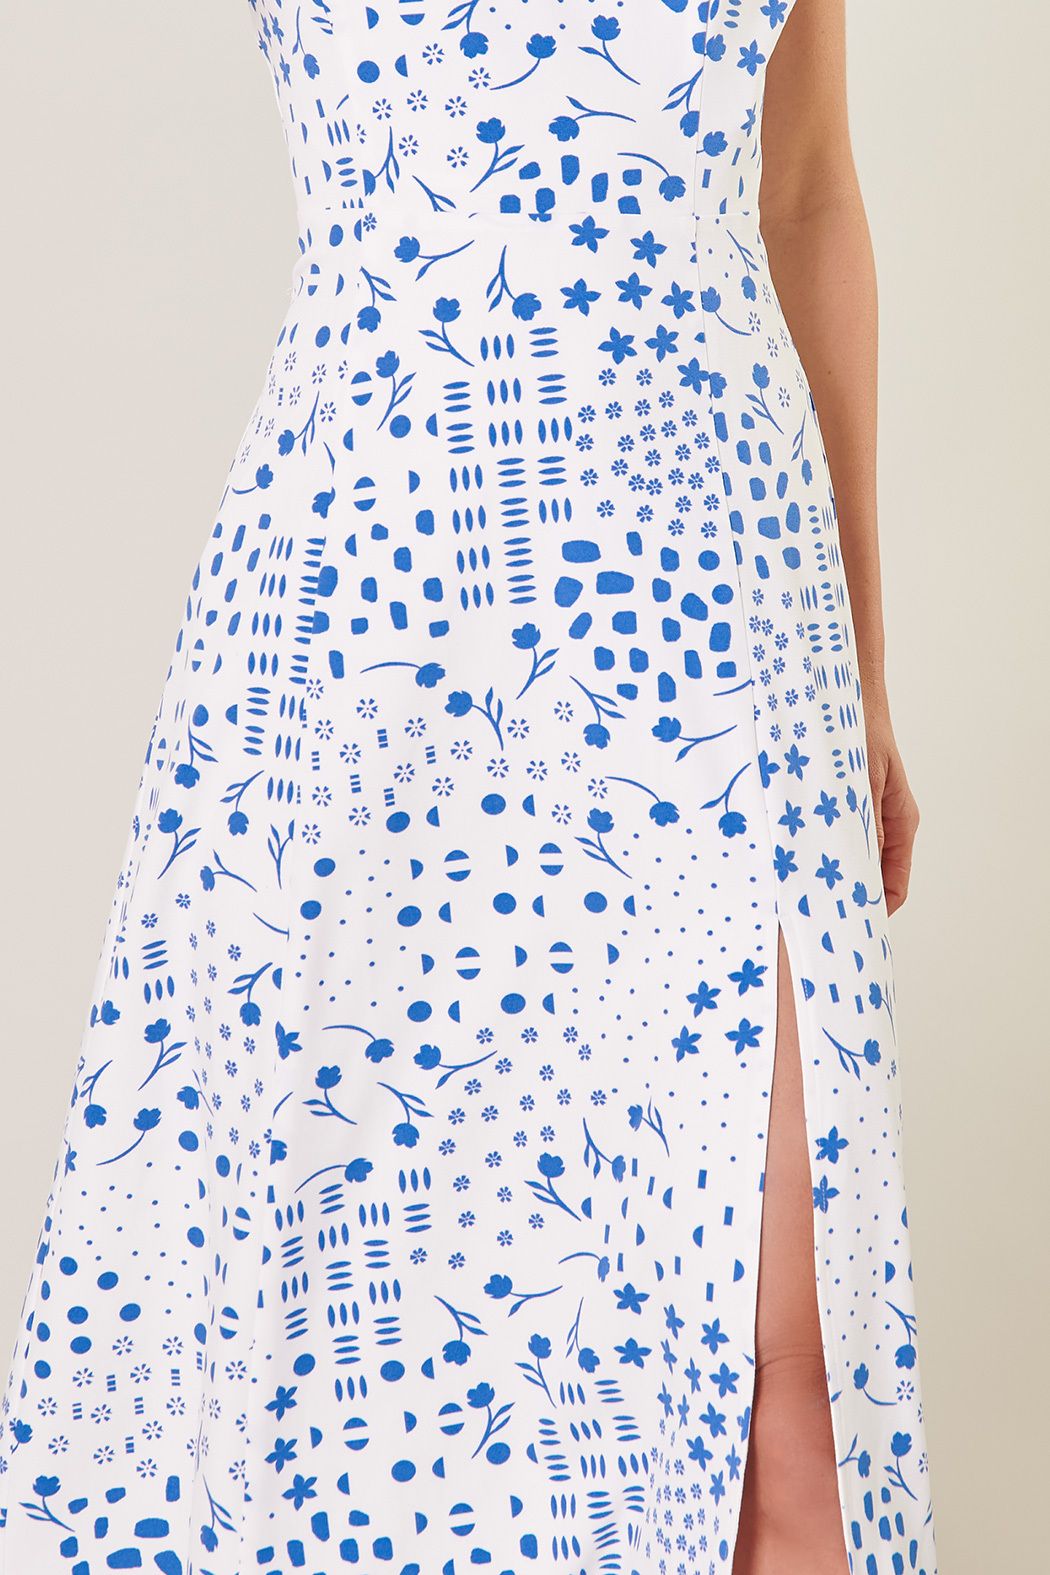 Lana Geometric Parting Ways Midi Dress